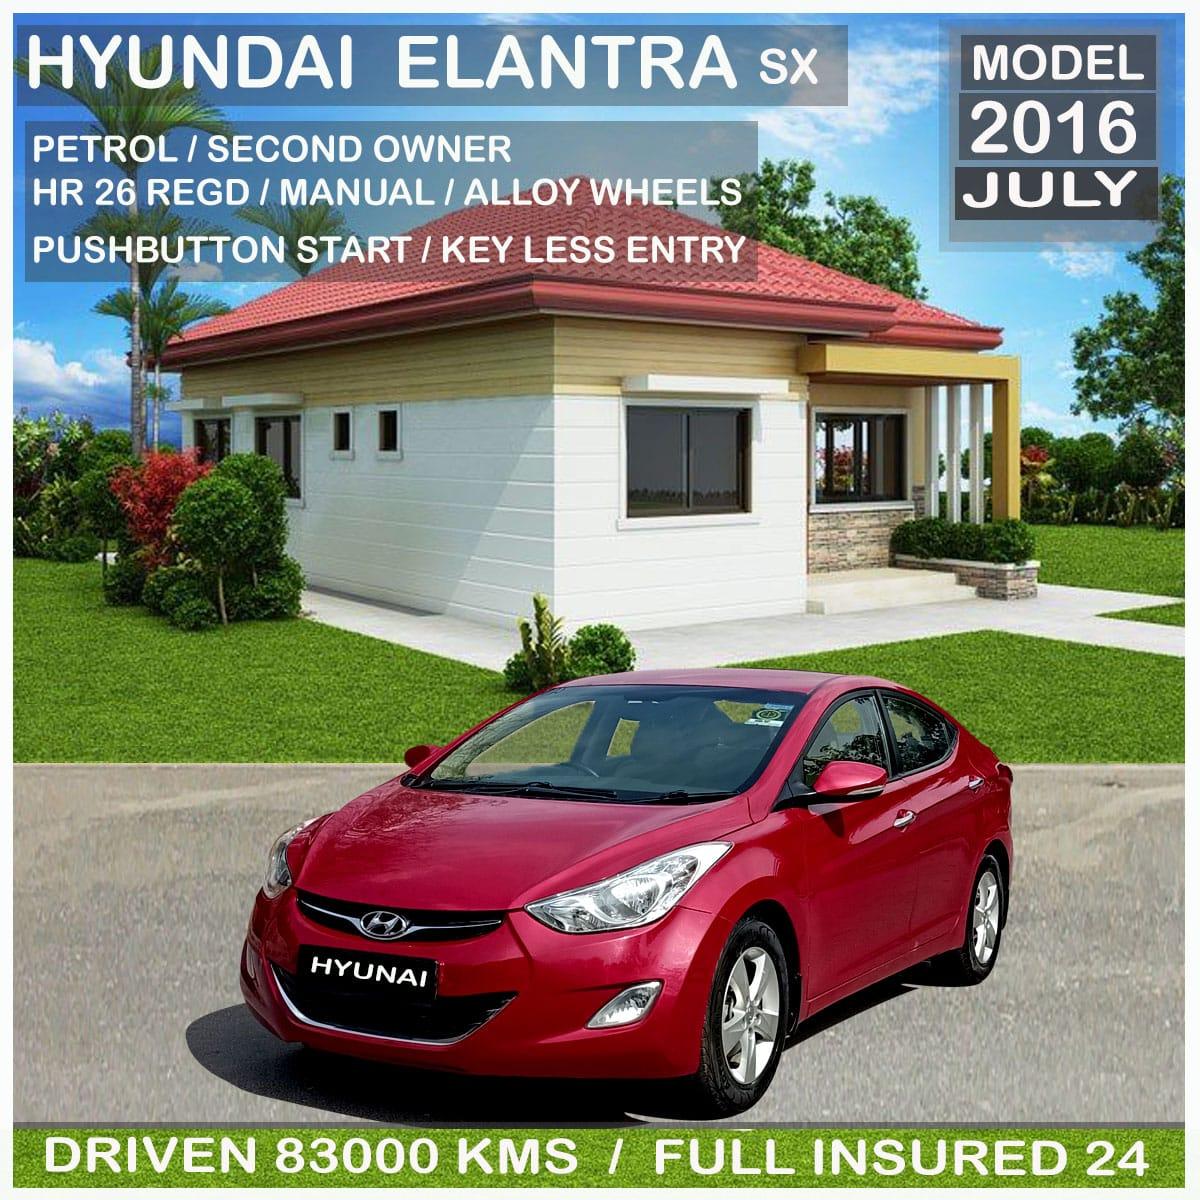 Used 2016 Hyundai Elantra 2.0 MPI SX AT BS IV for sale